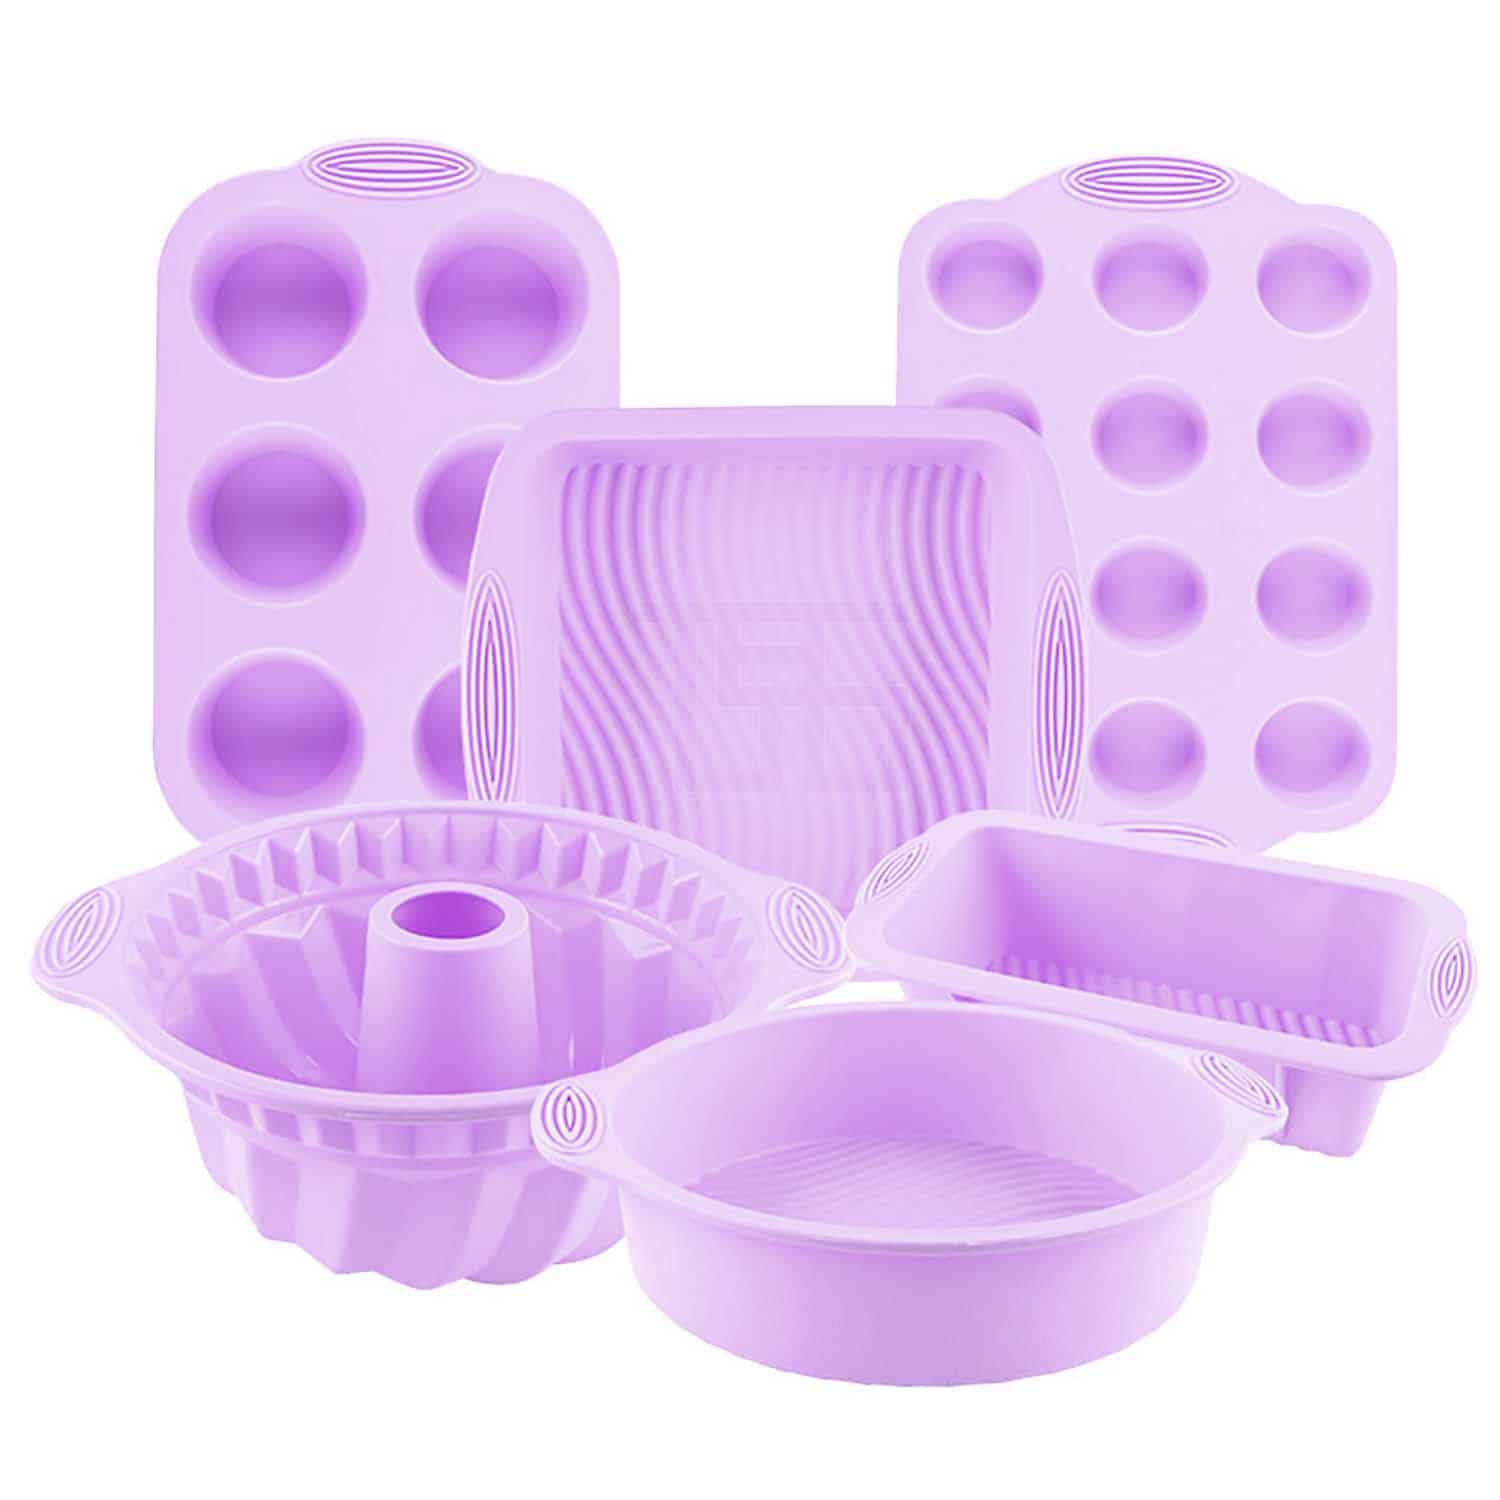 6 Piece Purple Silicone Baking Mould Set